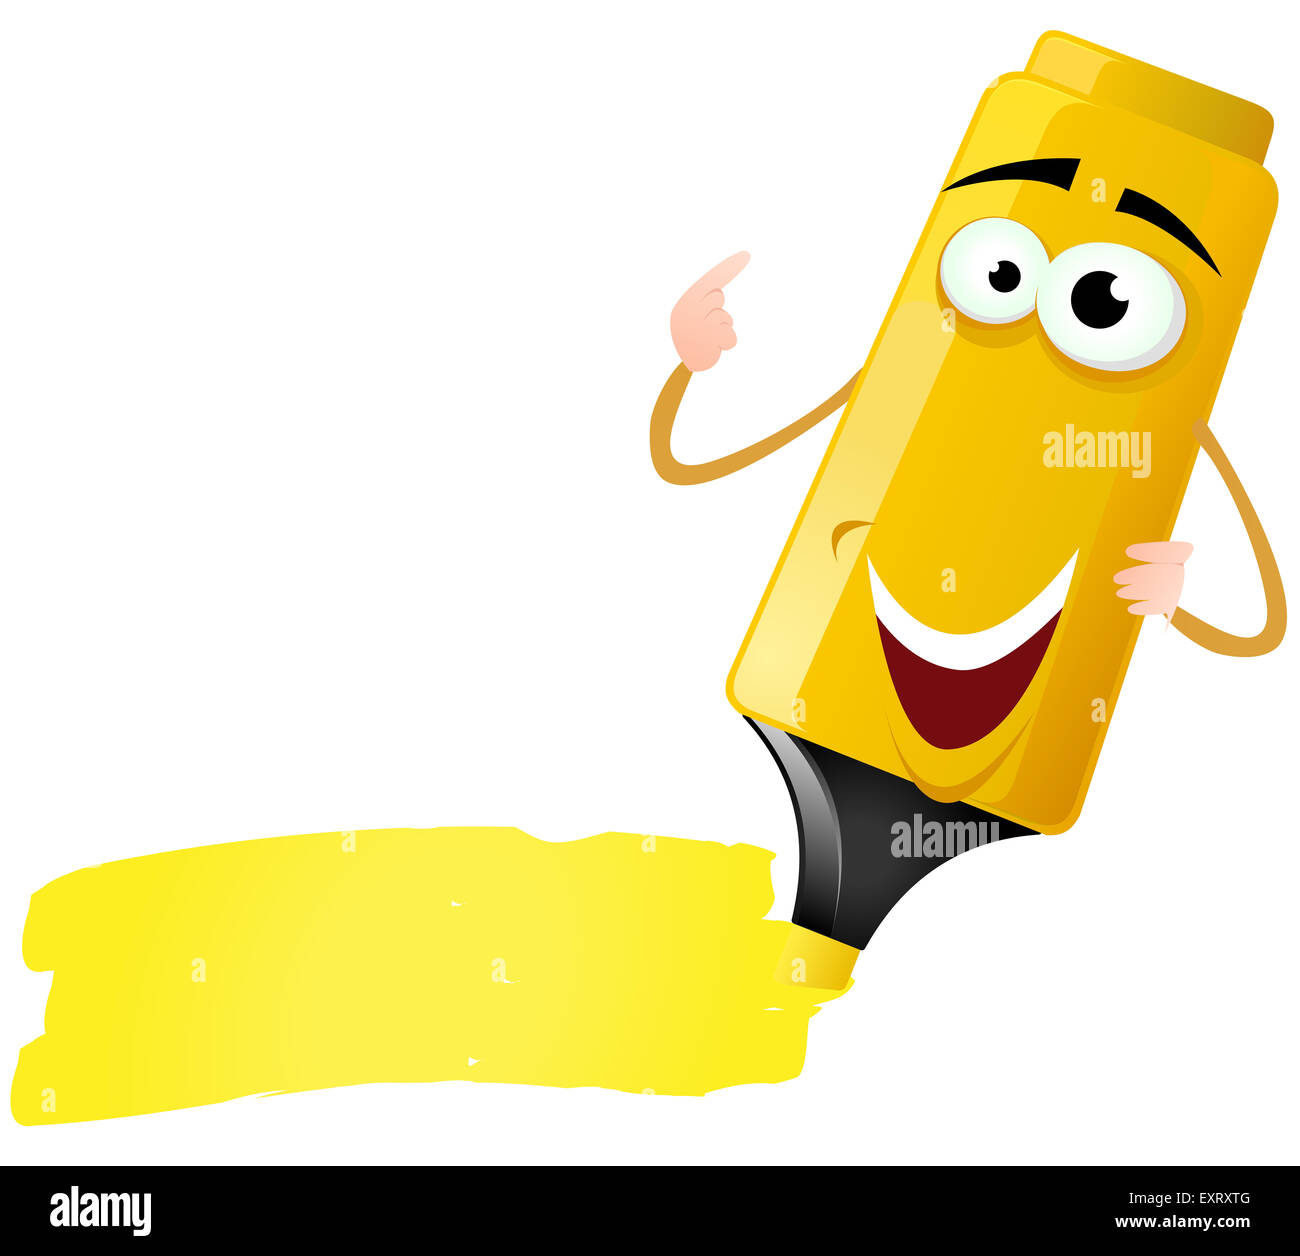 Illustration of a funny cartoon happy fluorescent highlighter felt tip pen in yellow Stock Photo